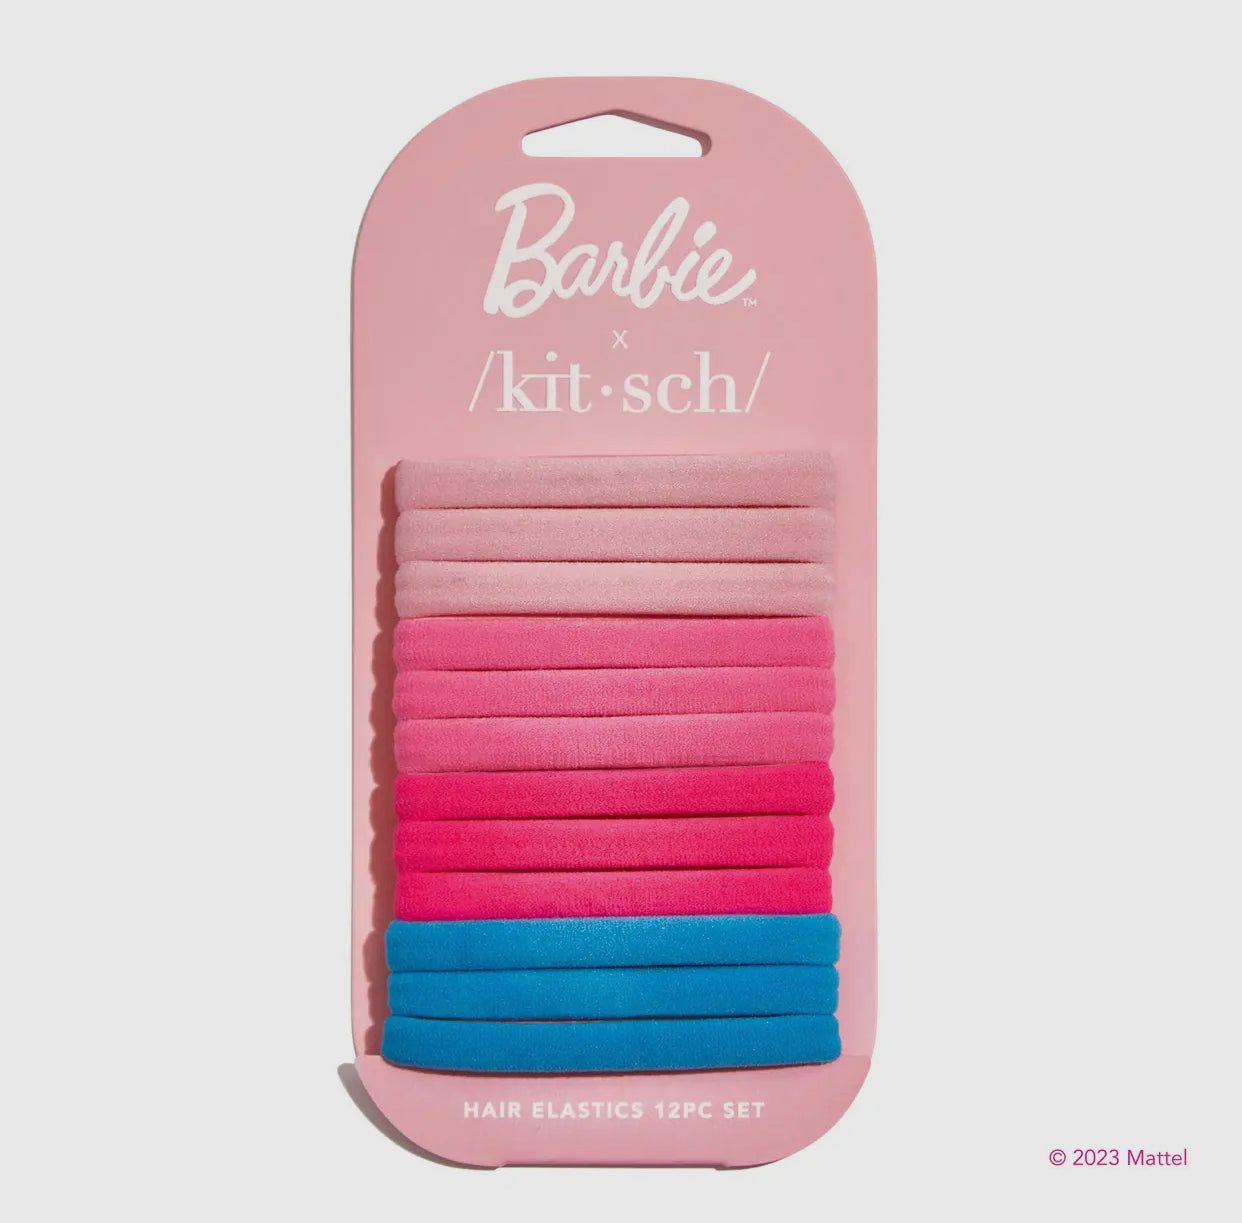 Barbie X Kitsch Recycled Nylon Elastics, 12 pc